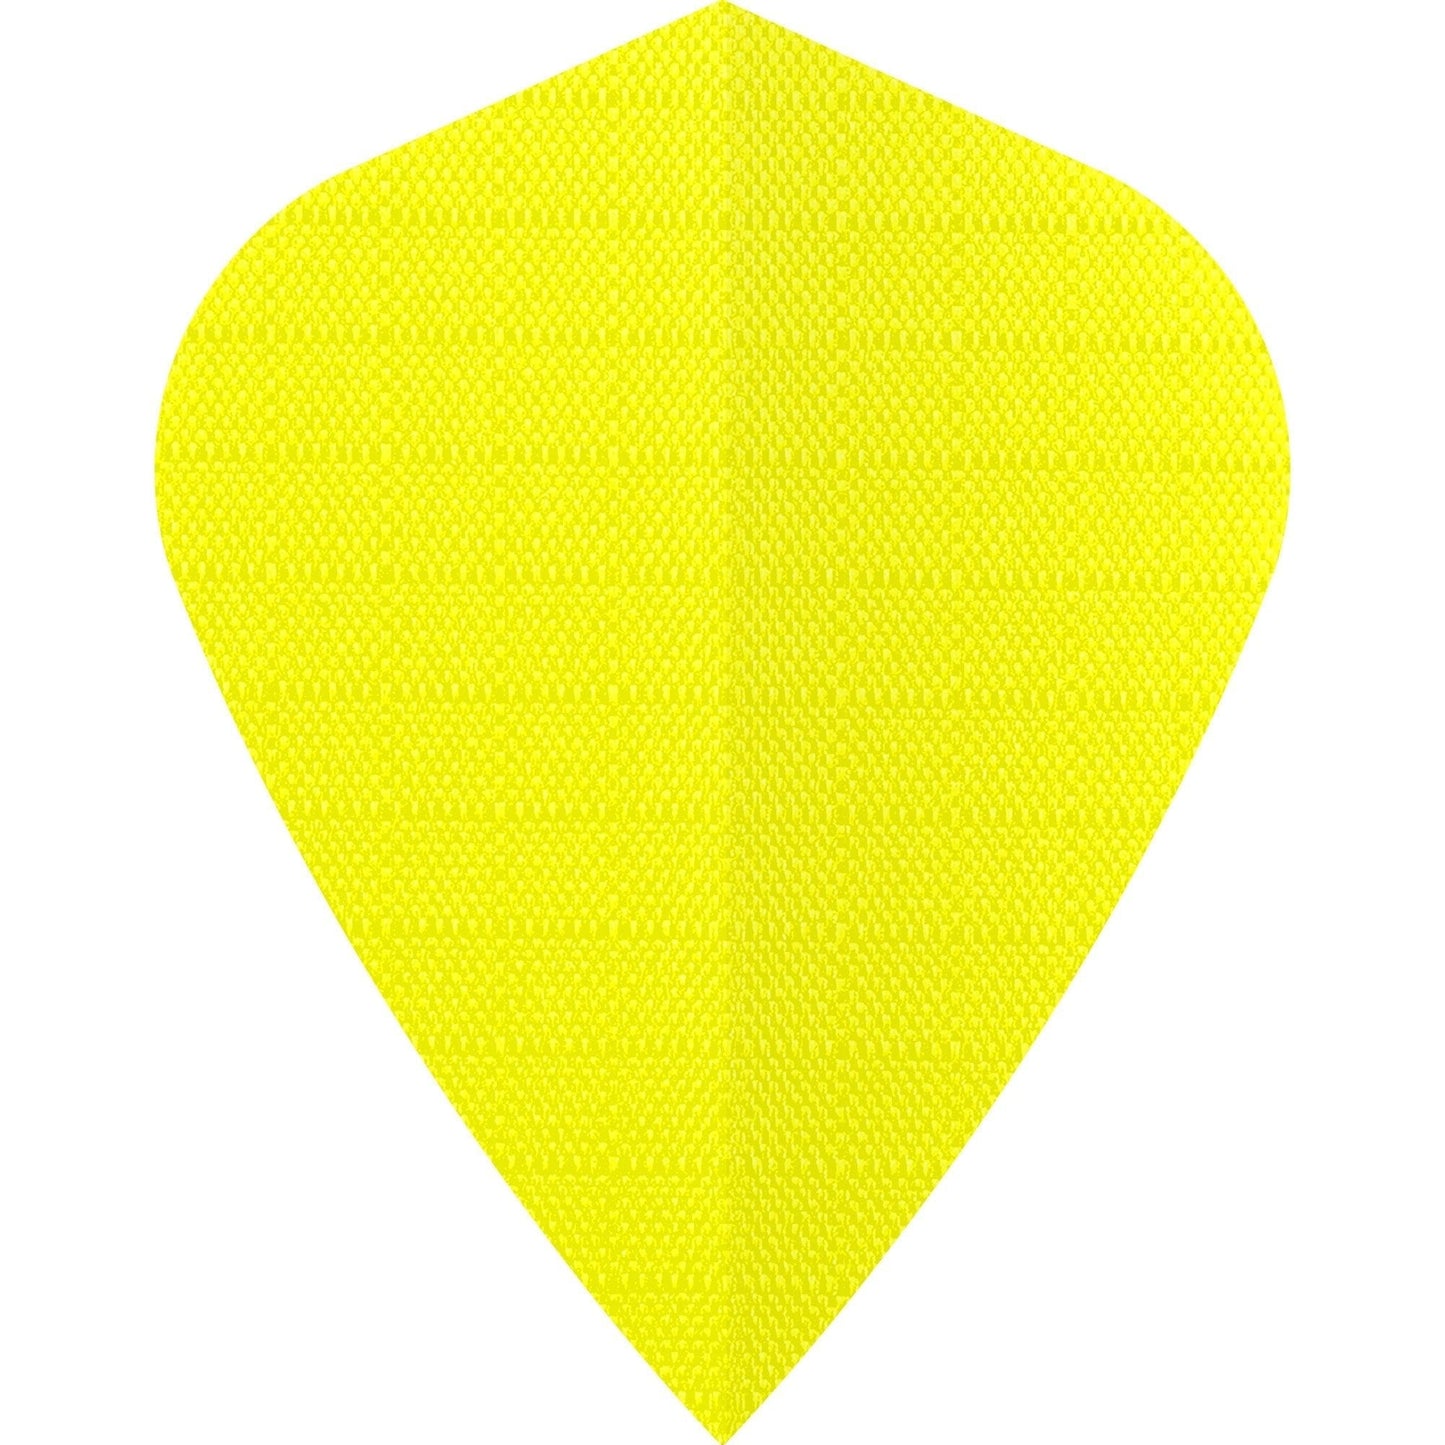 *Designa Dart Flights - Fabric Rip Stop Nylon - Longlife - Kite Fluro Yellow